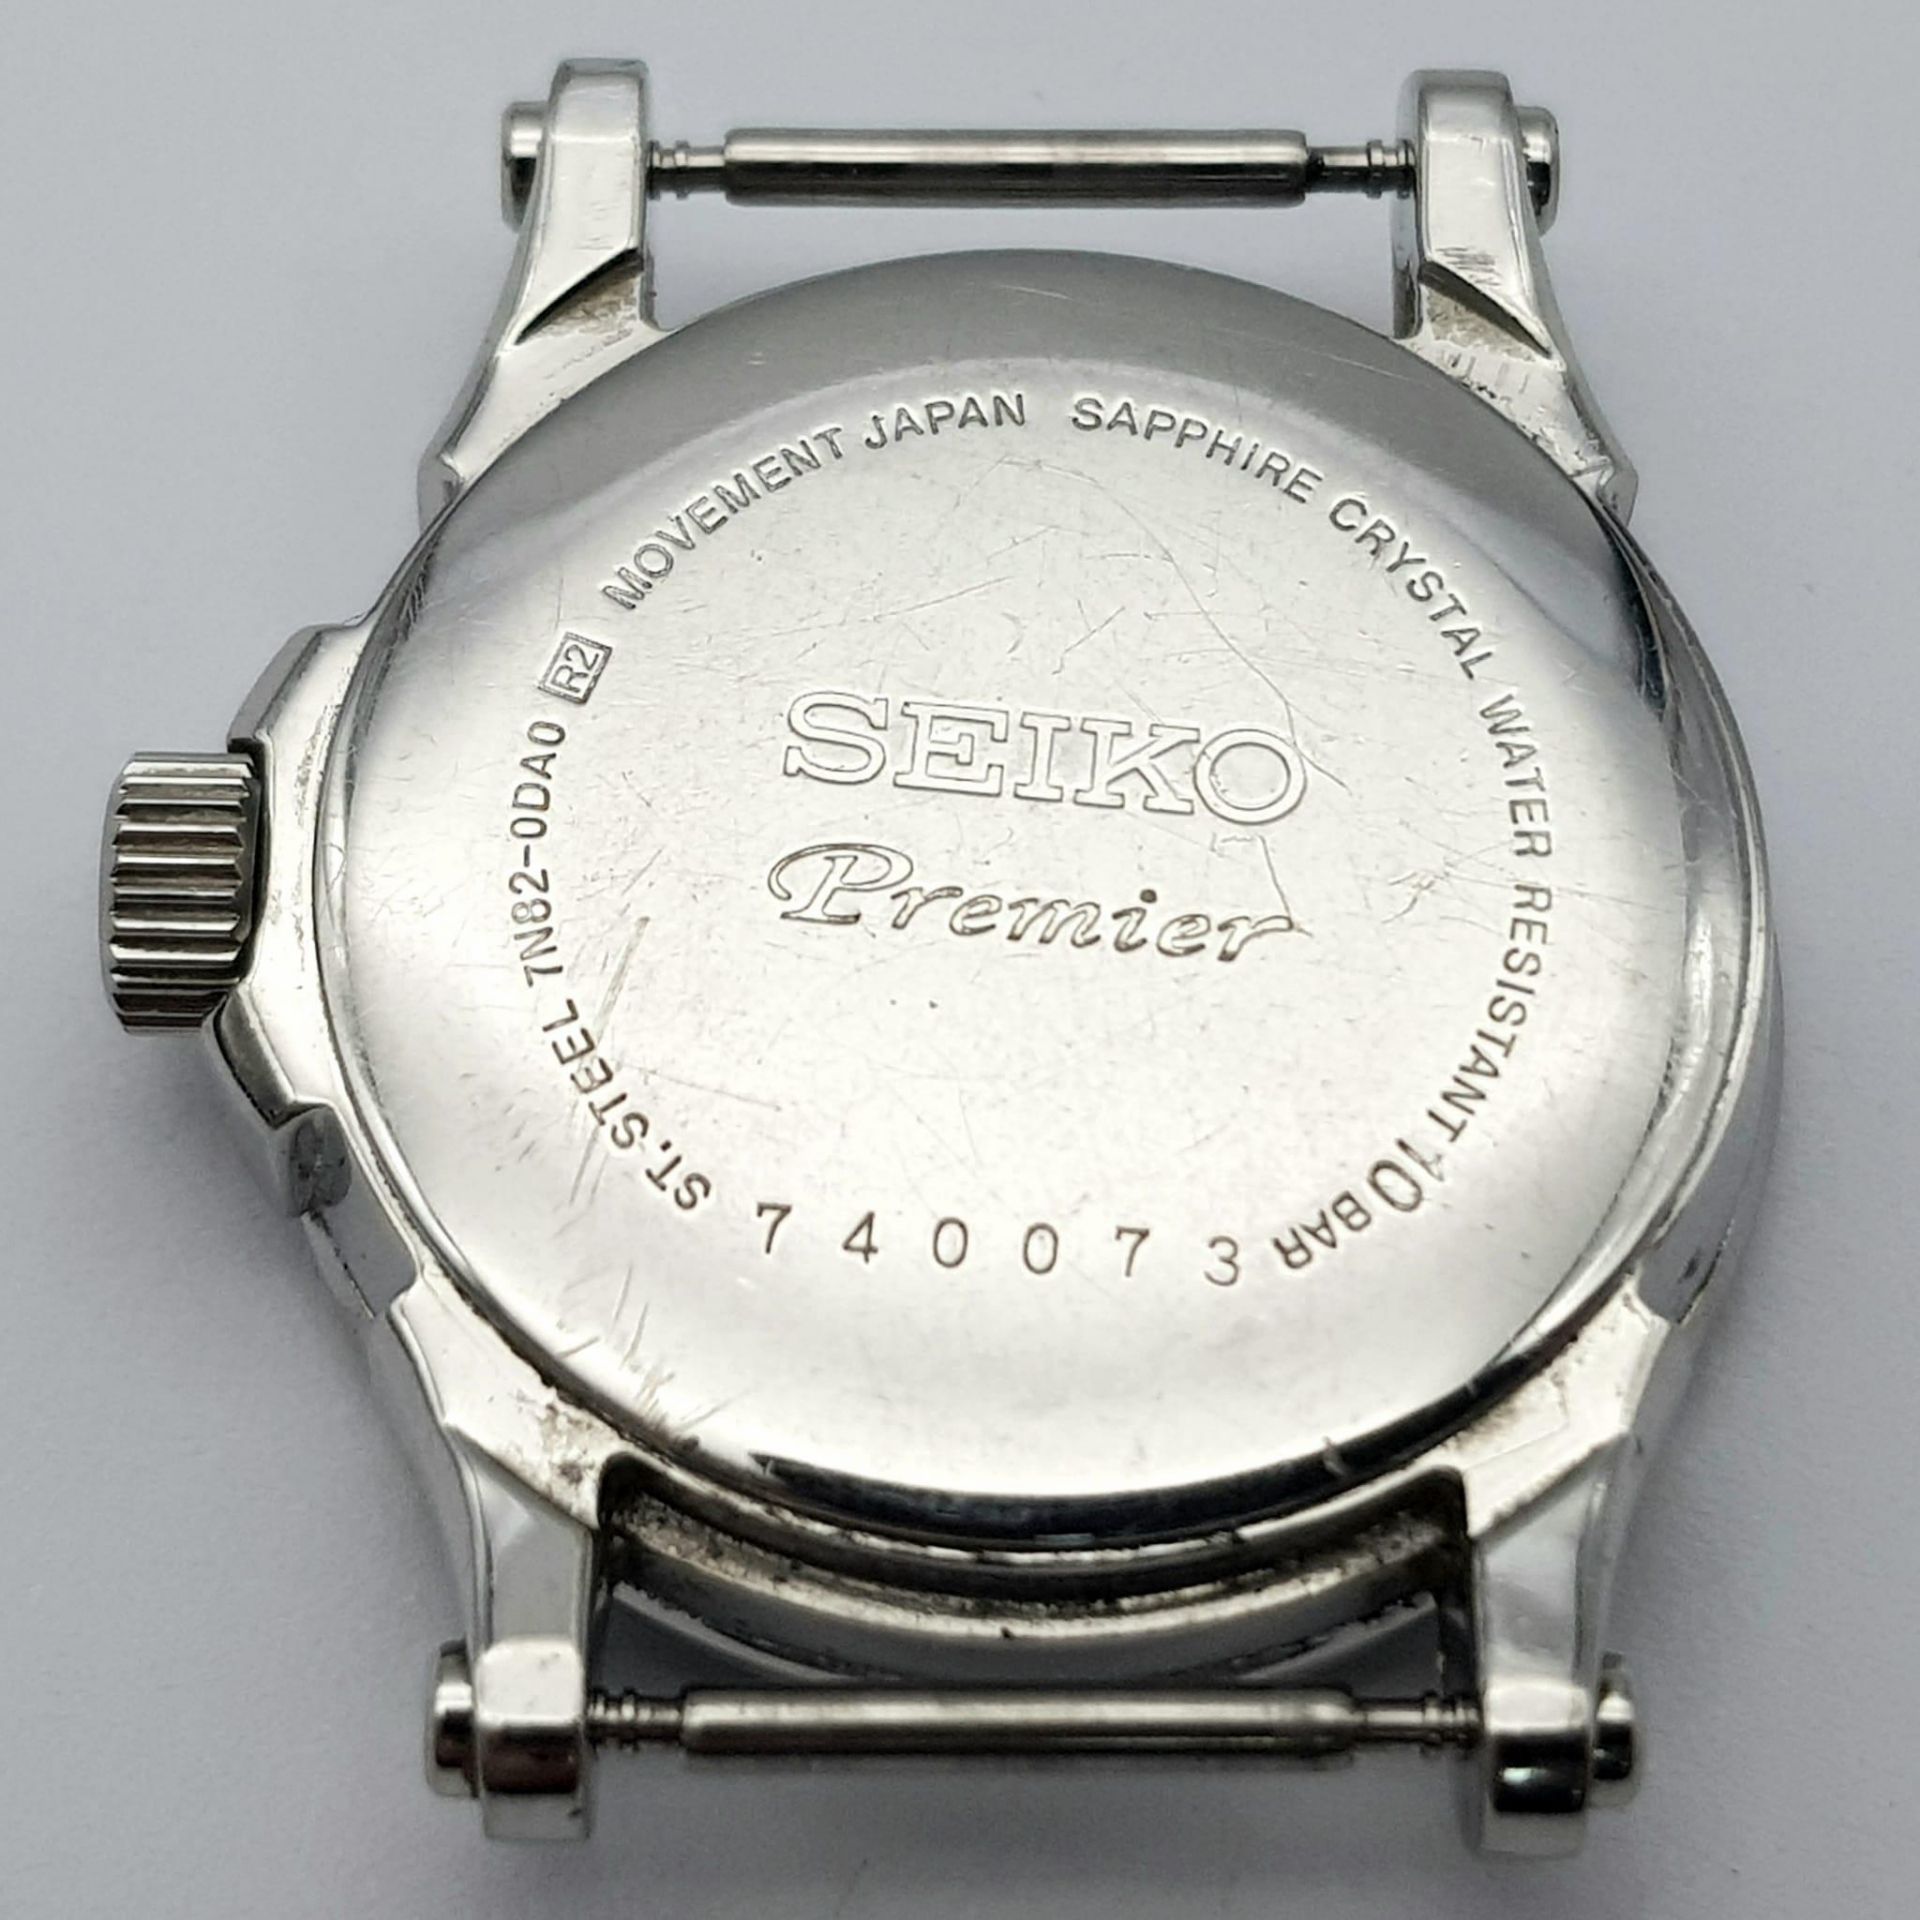 A Seiko Premier Ladies Diamond Watch Case. 27mm. Diamond bezel. Mother of pearl dial. In working - Bild 6 aus 8